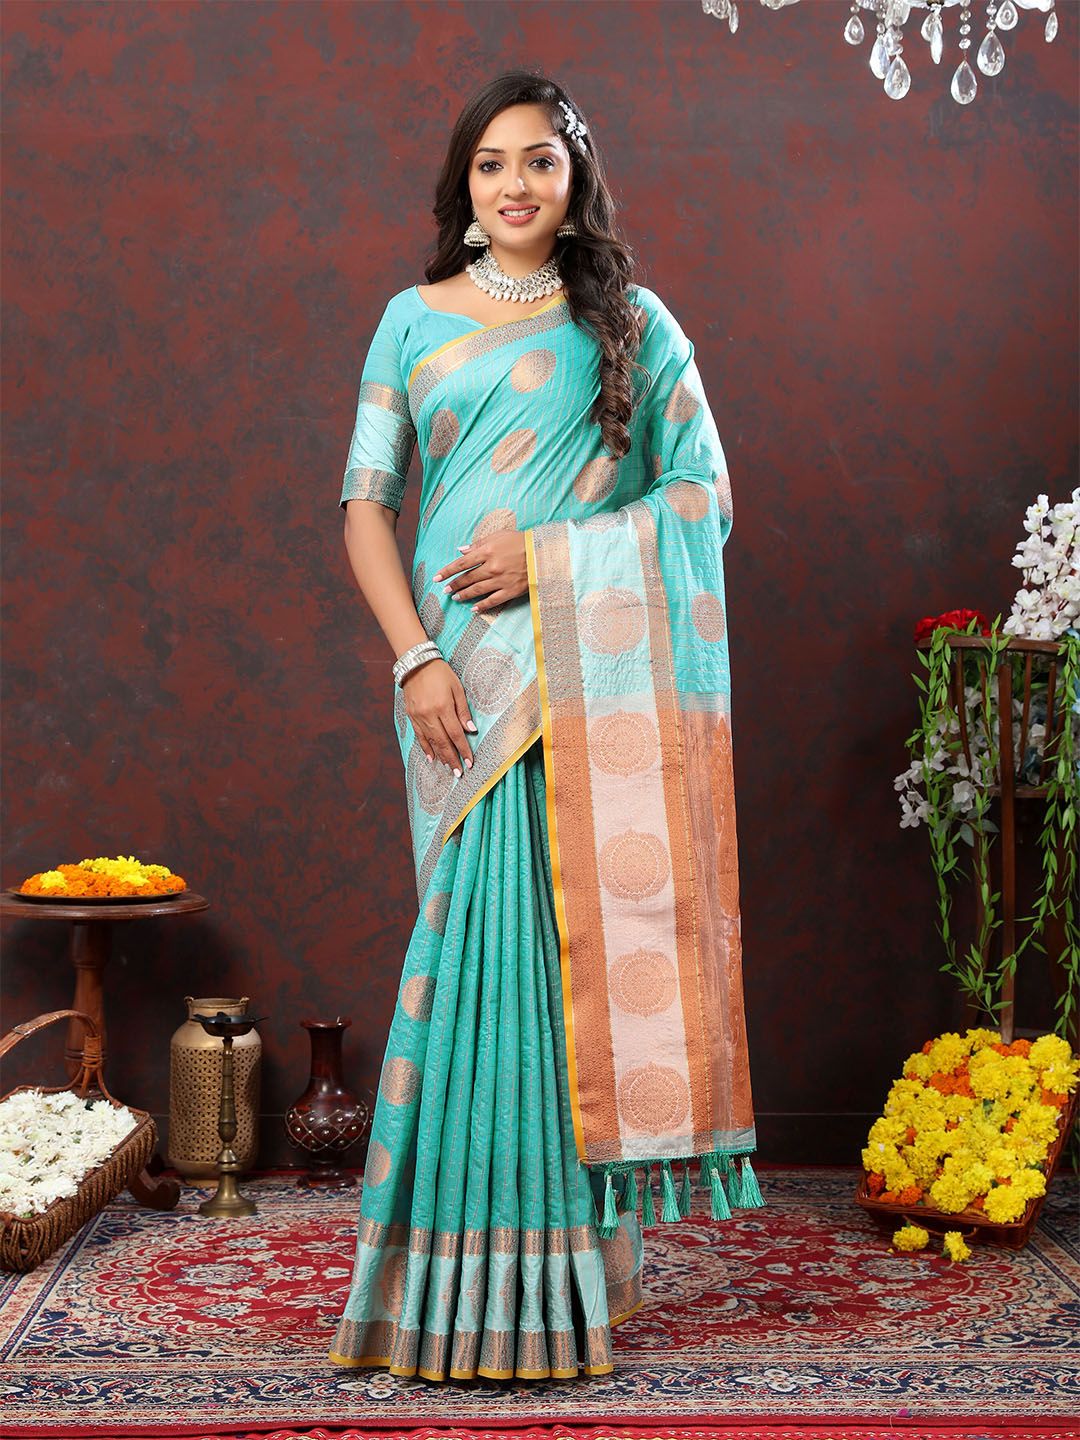 Divyadham Textiles Turquoise Blue & Copper-Toned Ethnic Motifs Zari Silk Cotton Banarasi Saree Price in India